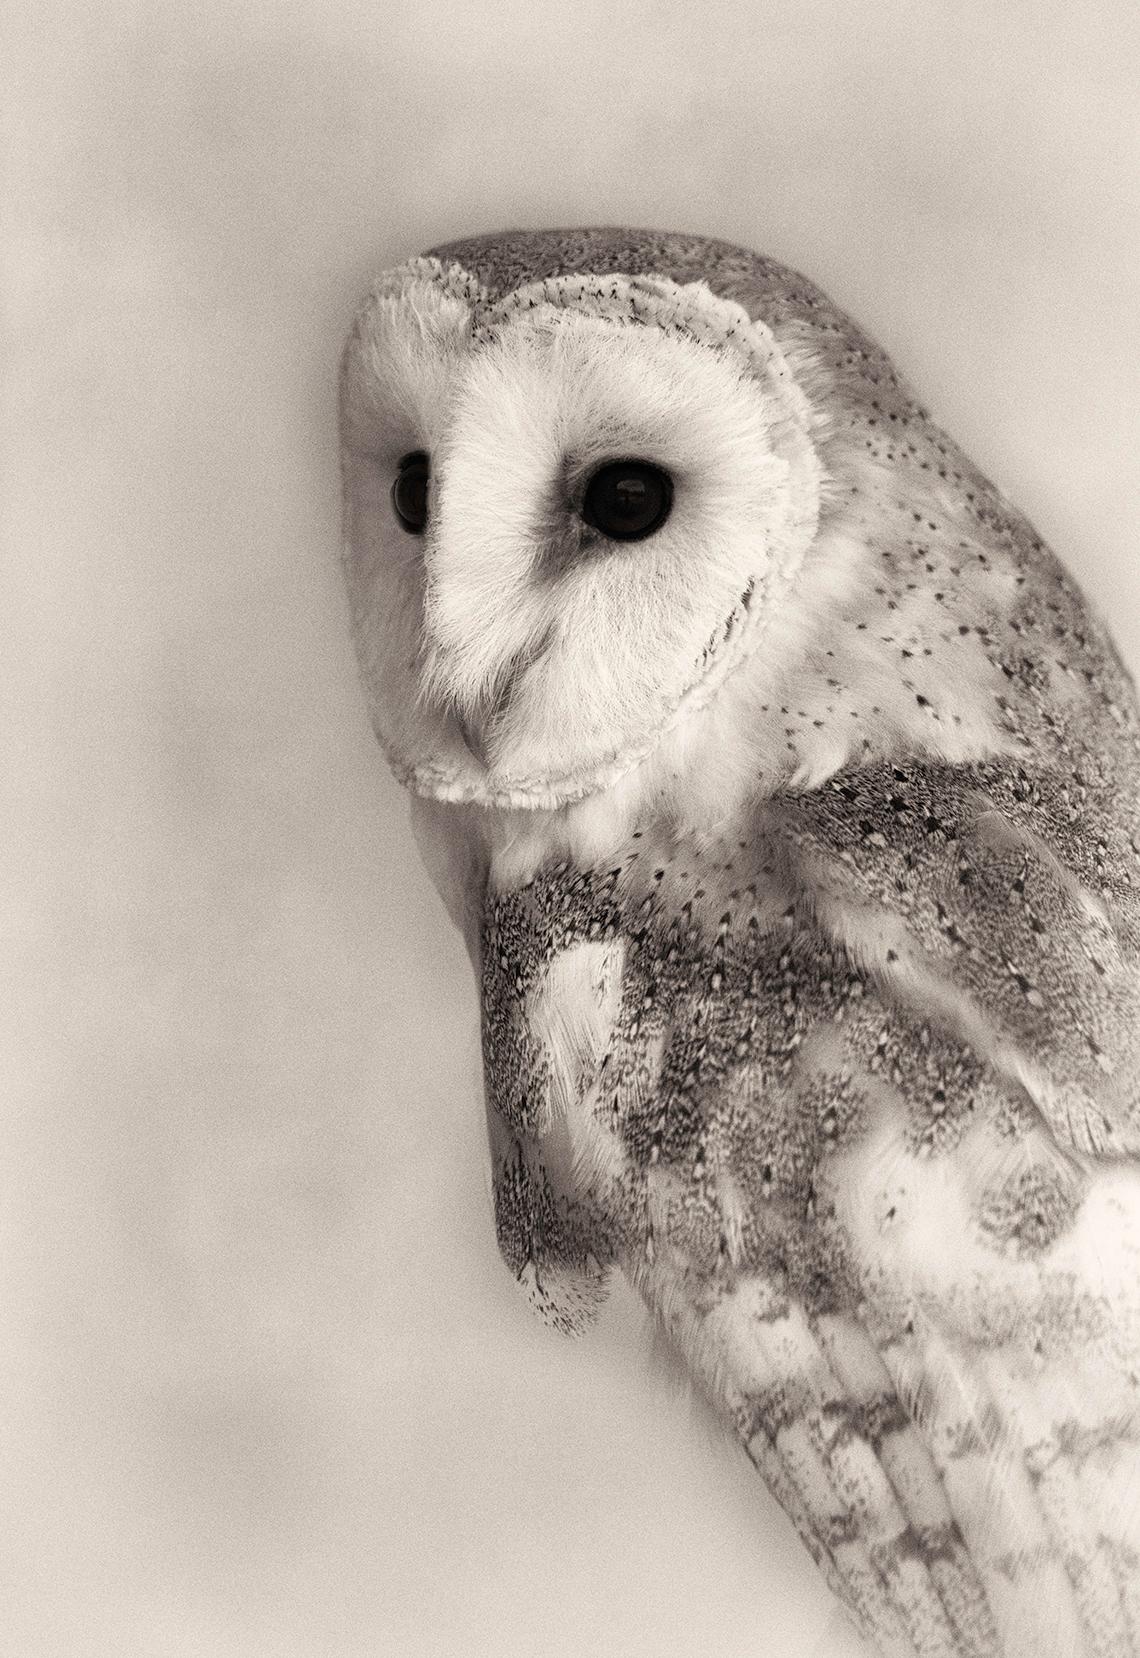 Beth Moon Animal Print - Barn Owl Portrait, limited edition photograph, signed, Platinum/Palladium Print